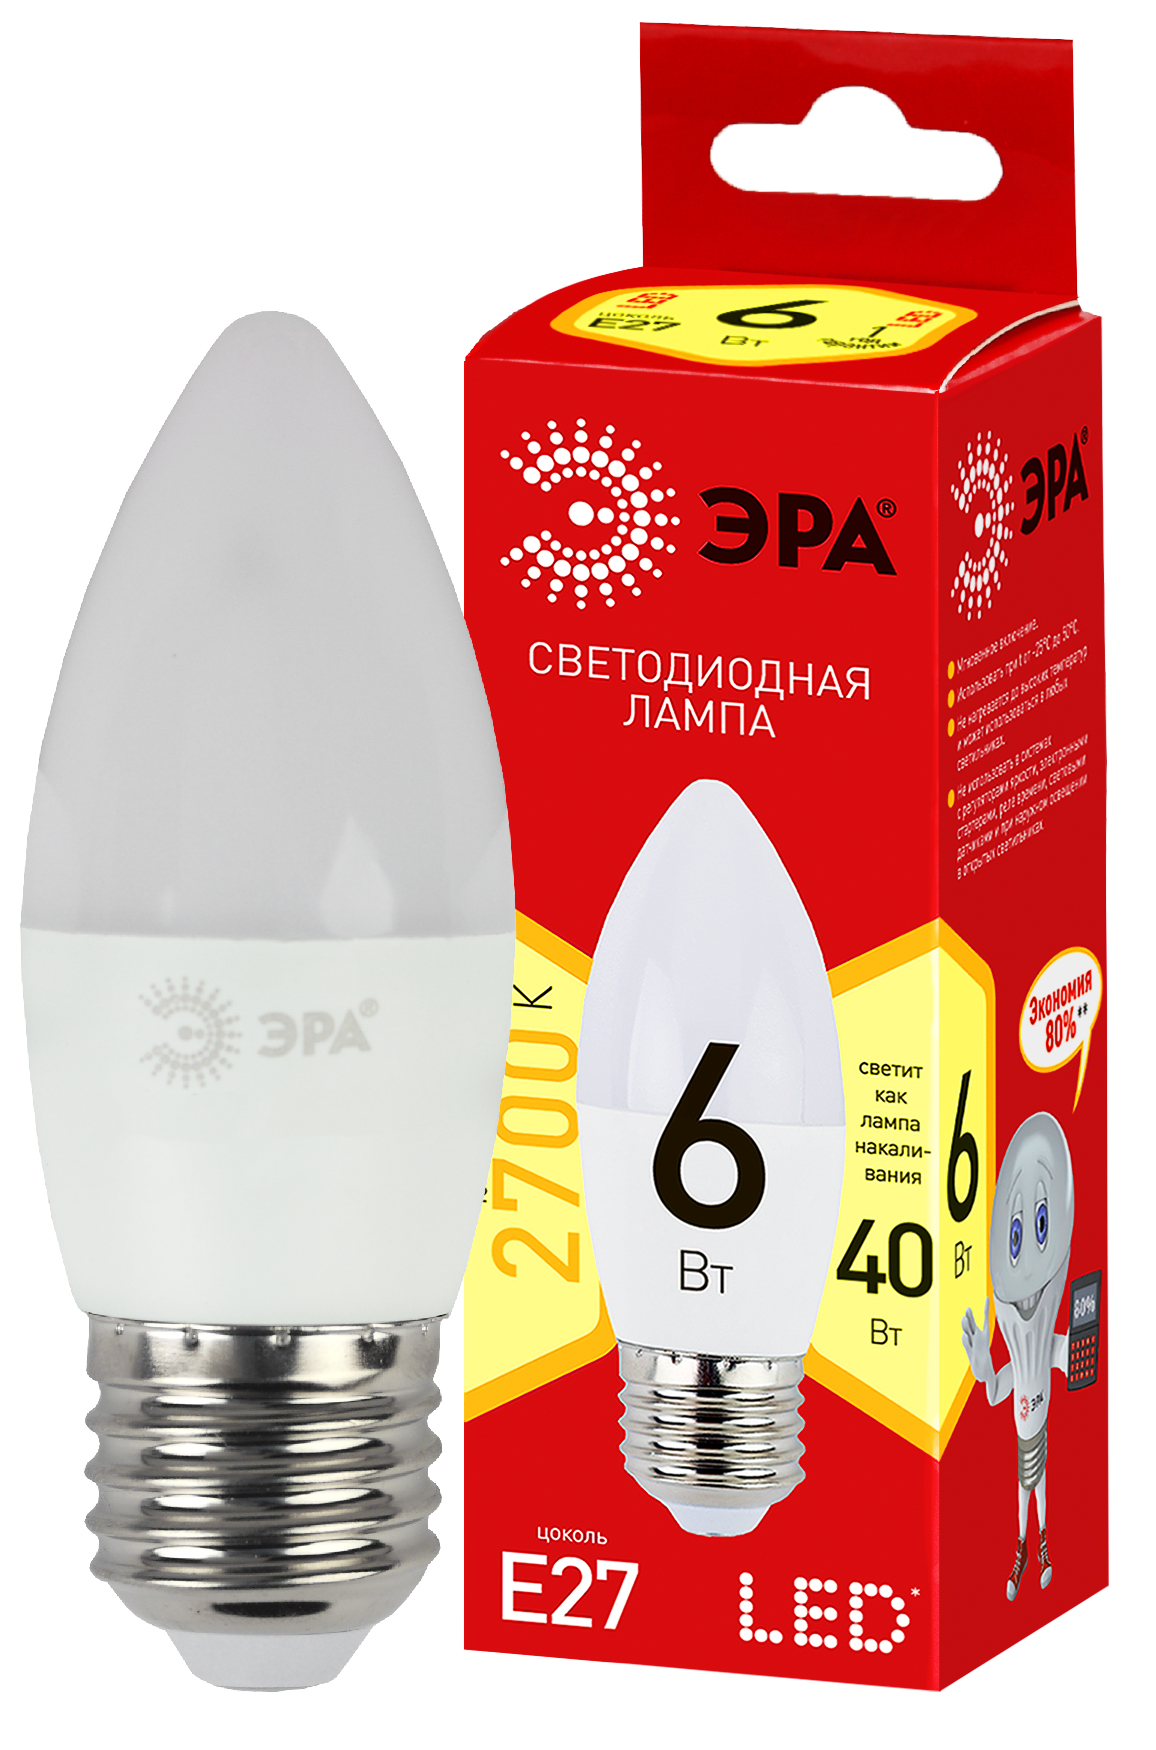 Лампочки LED E27 Эра эра eco led b35-6w-827-e27